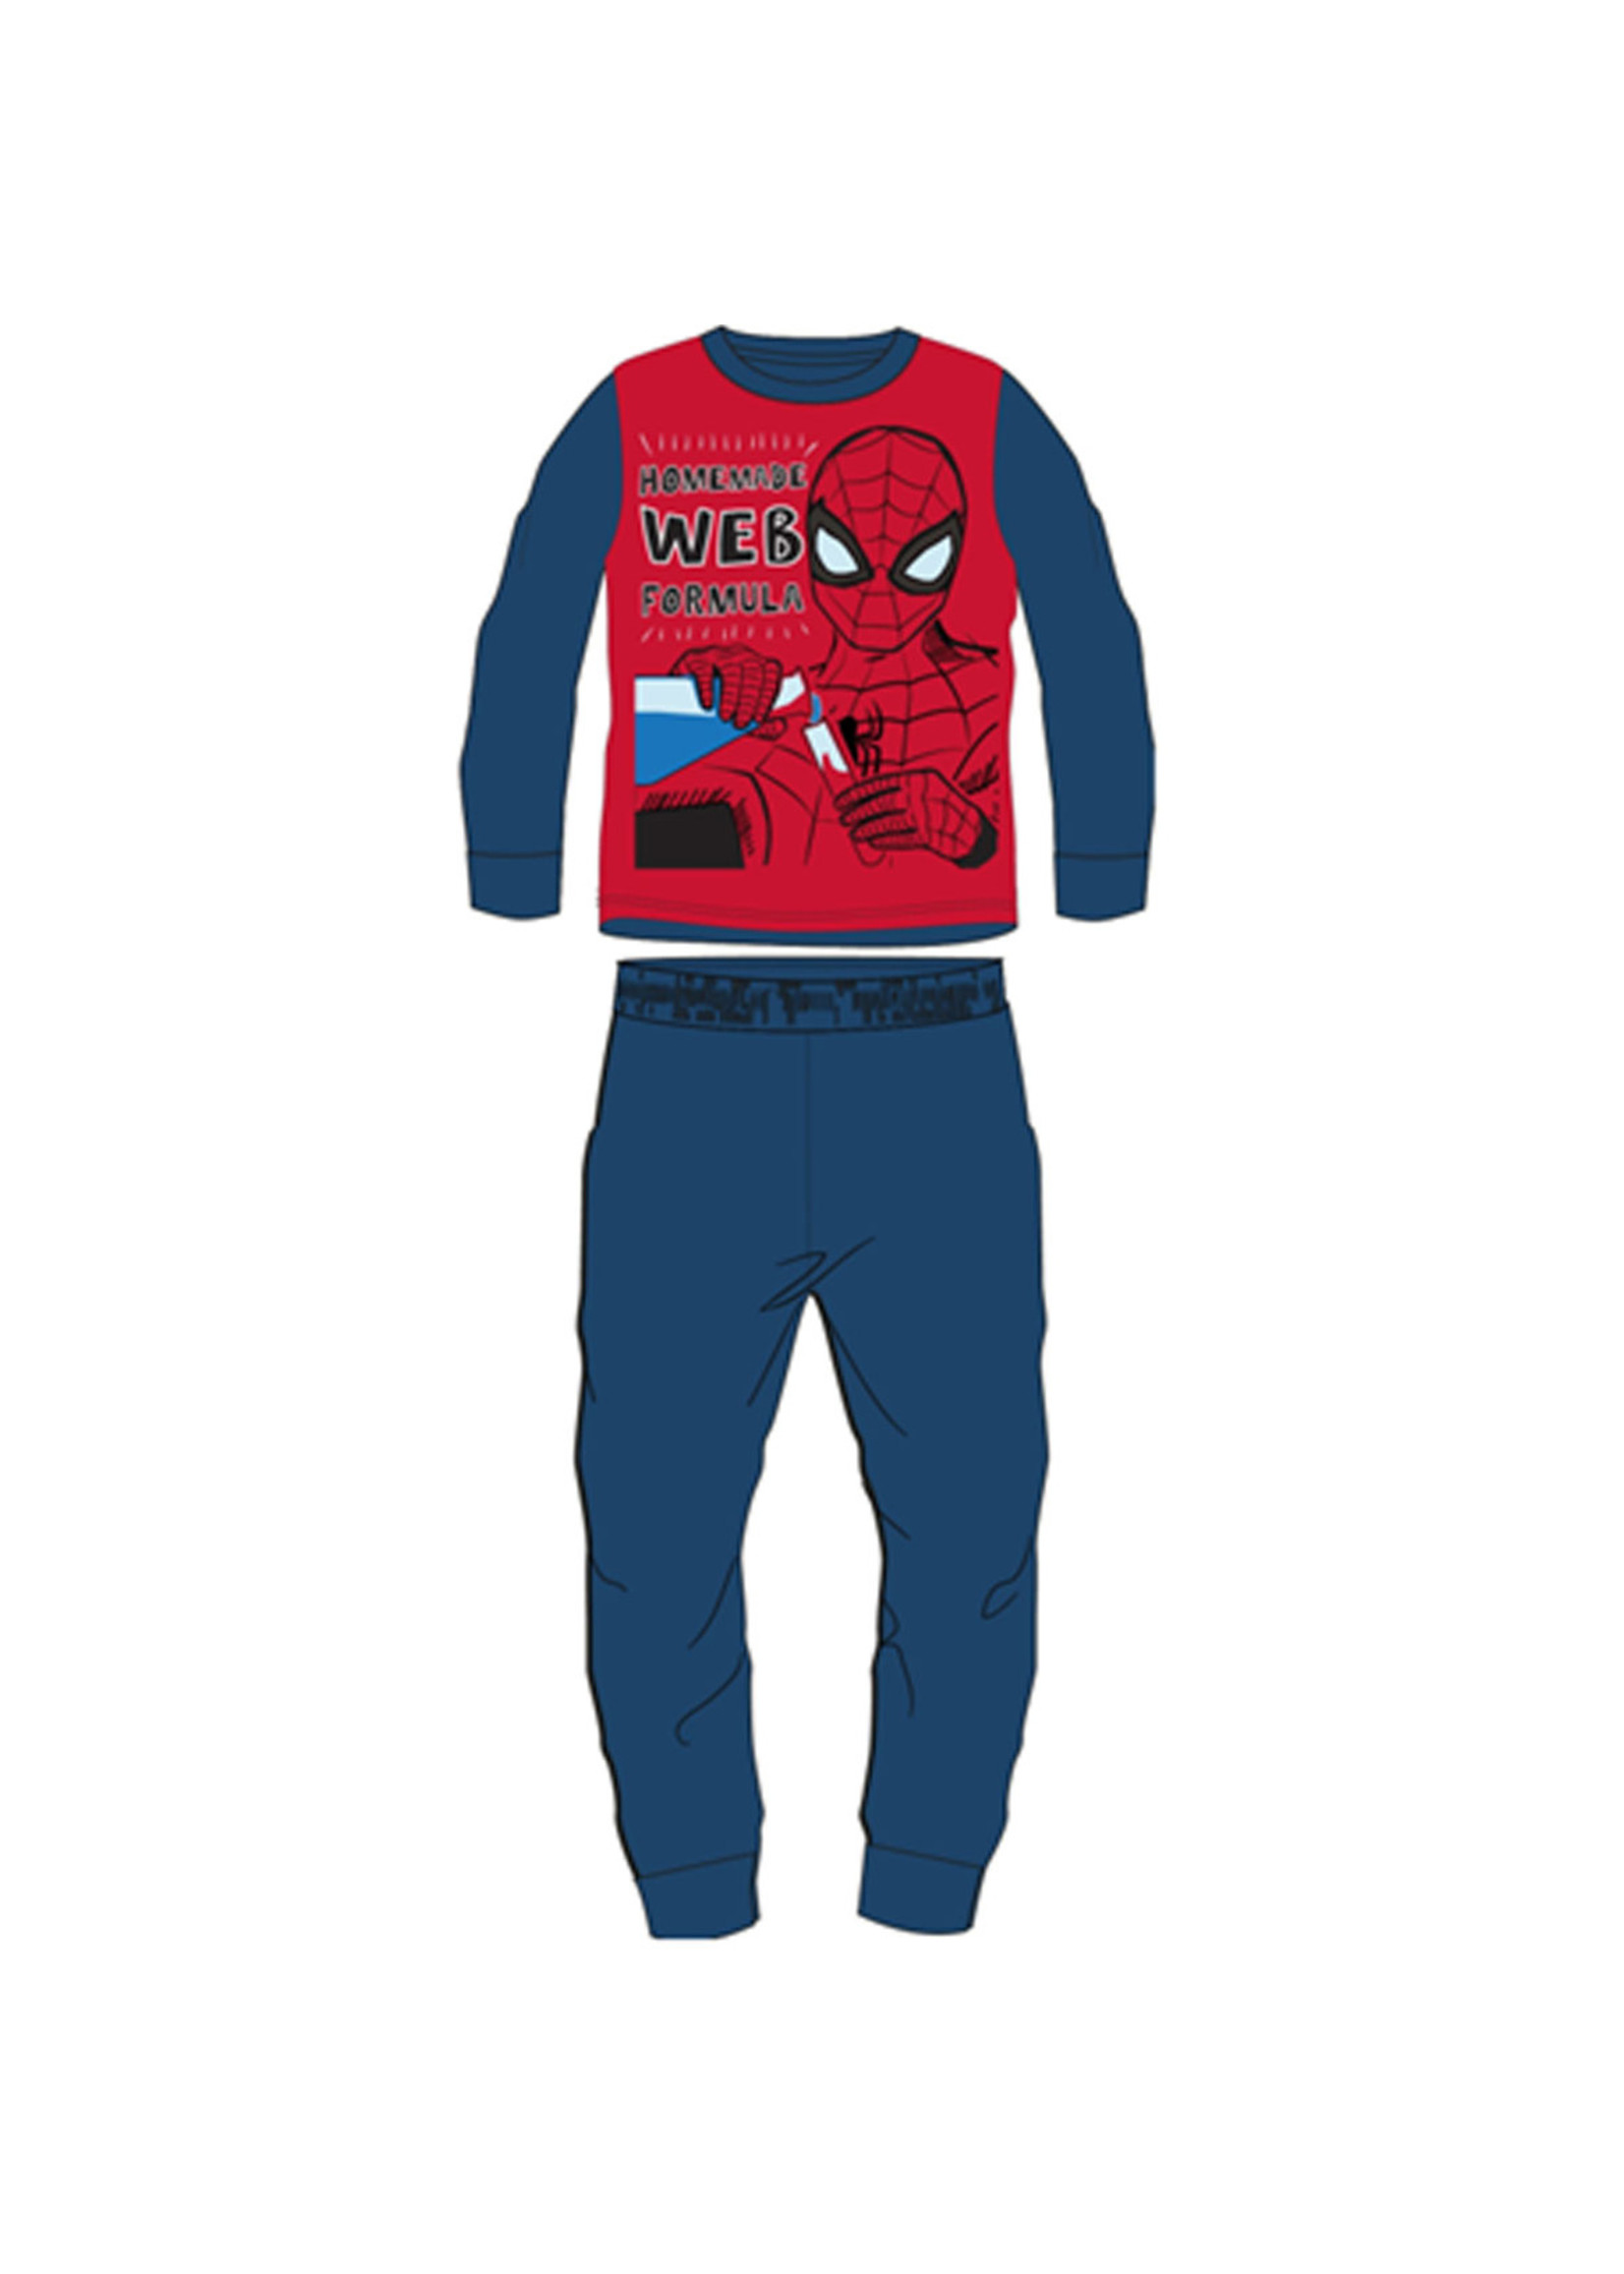 Marvel Spiderman Pajamas from Marvel blue